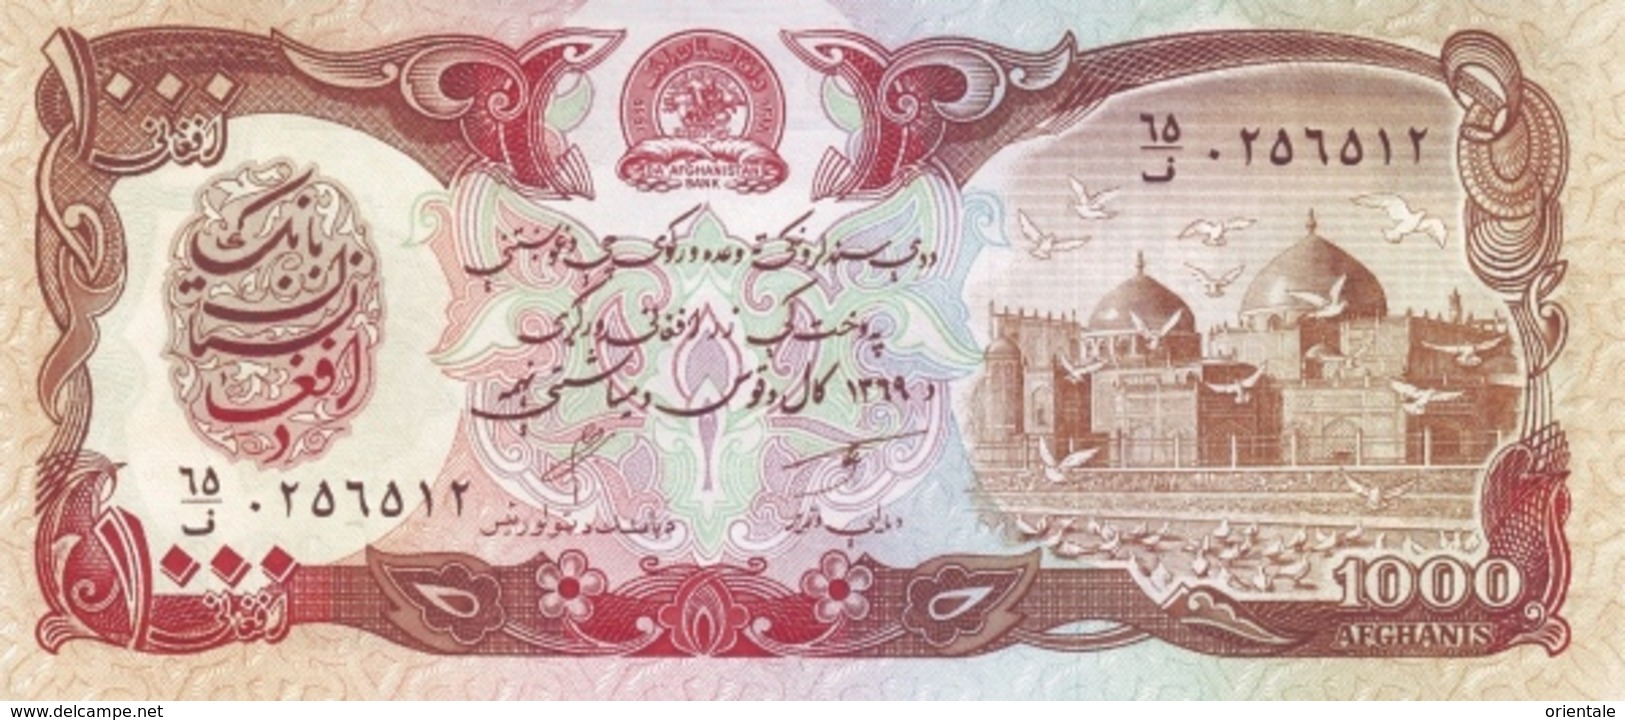 AFGHANISTAN P. 61b 1000 A 1990 UNC (2 Billets) - Afghanistan